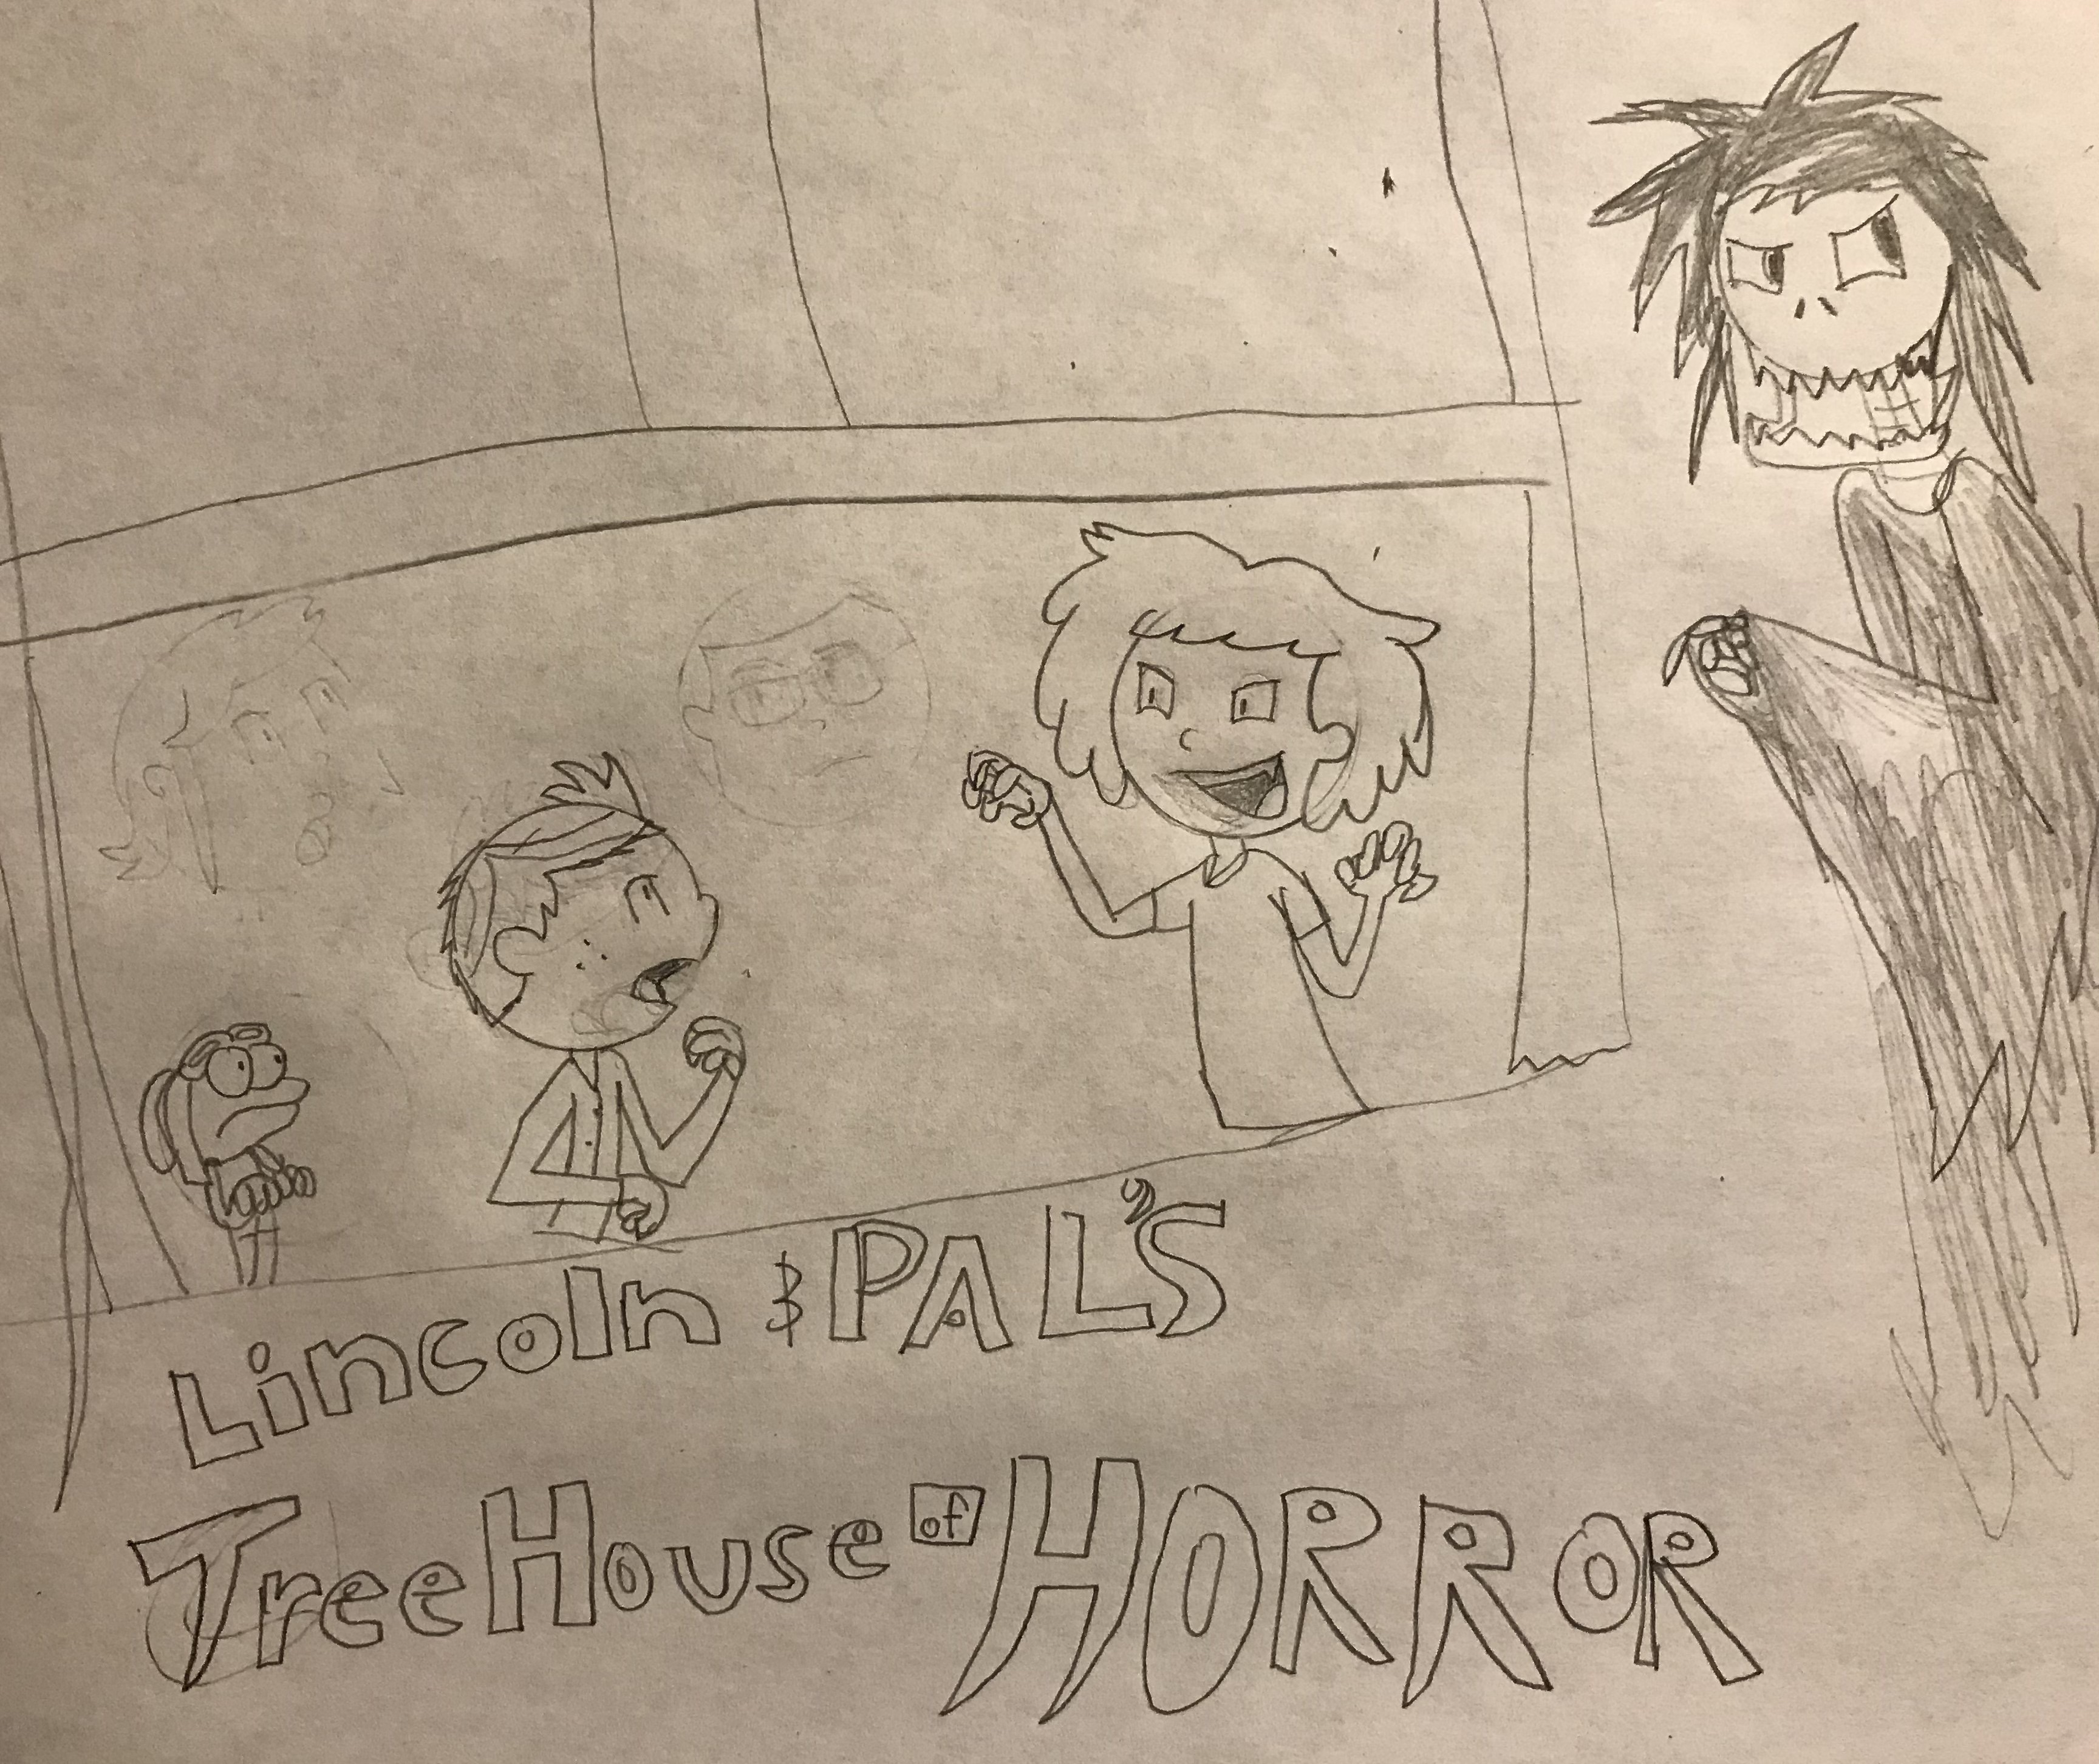 Lincoln pals Treehouse of Horror by GodzillaFanKM14 on DeviantArt